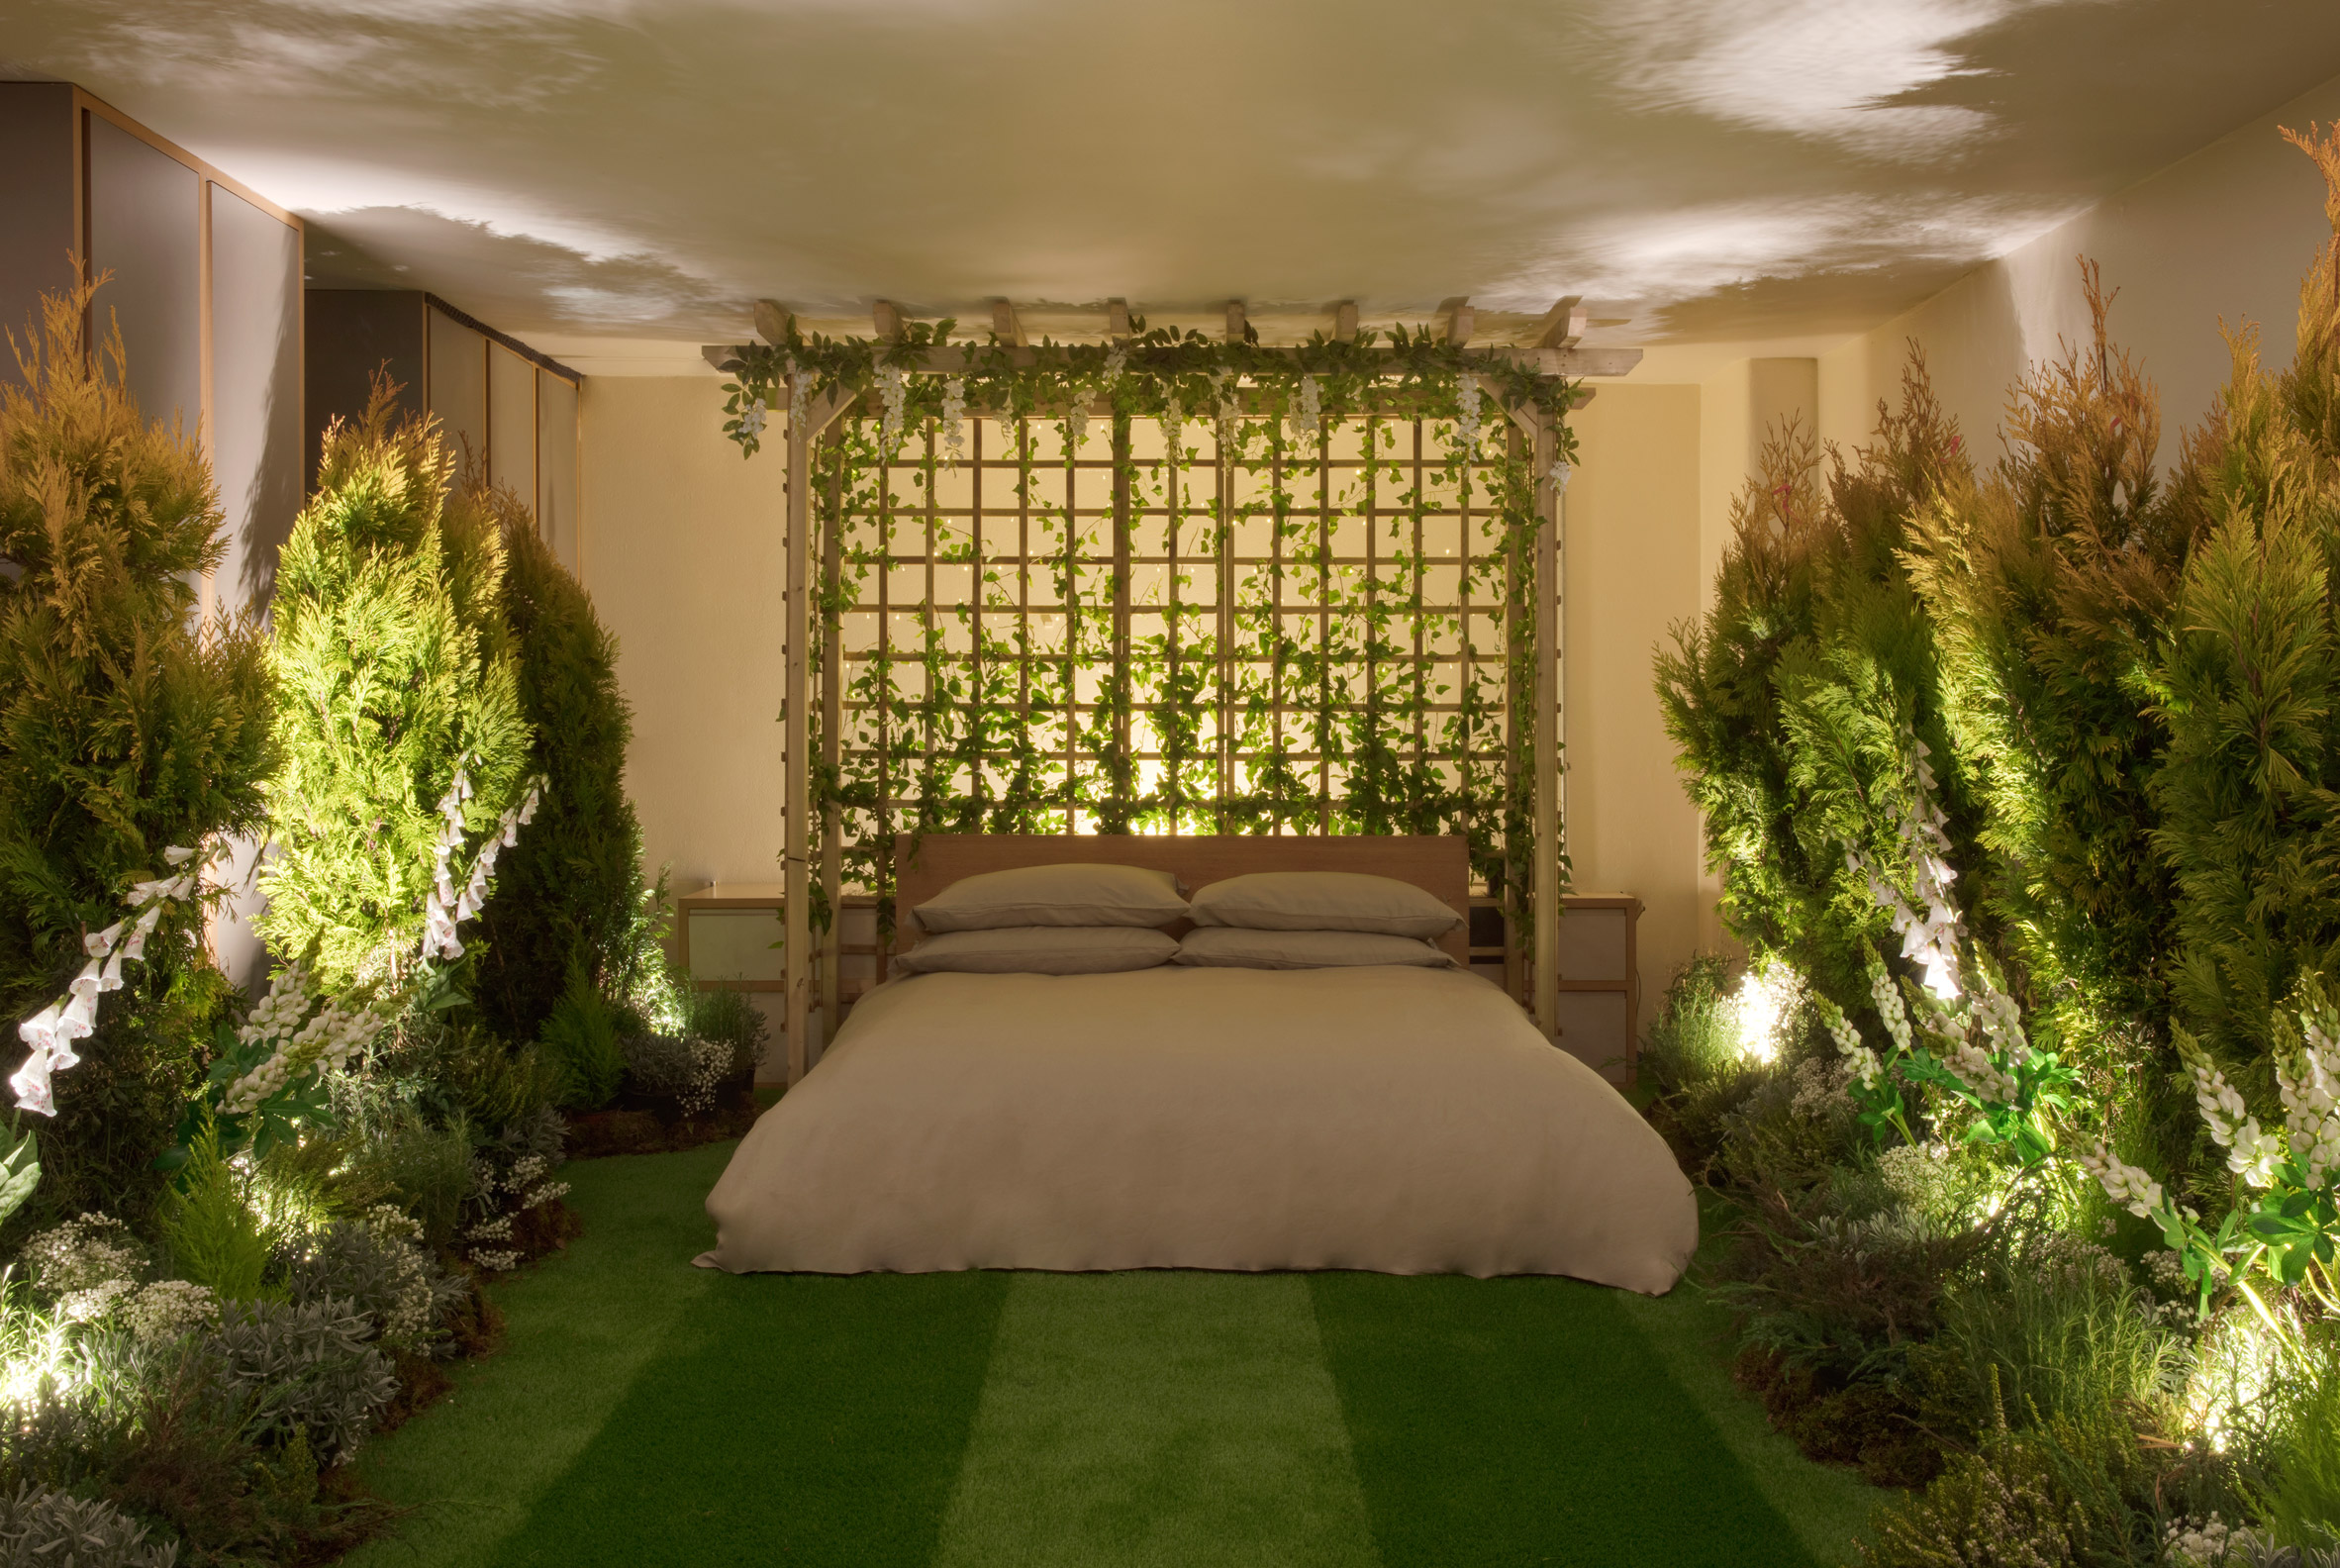 greenery-apartment-installation-airbnb-pantone-design_dezeen_2364_col_10.jpg